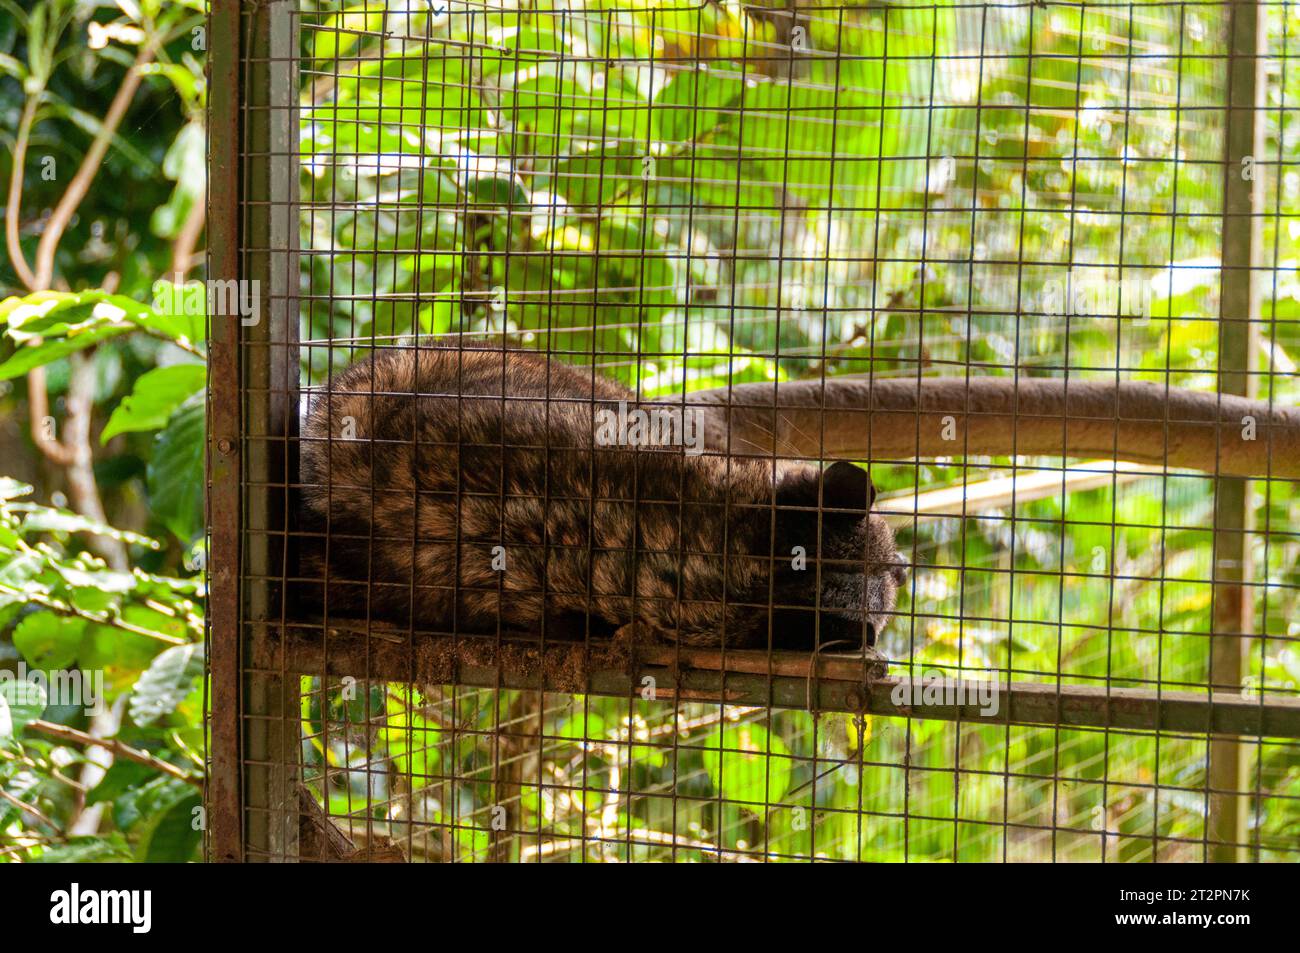 A Civet Cat (Luwak) Sleeping in captivity in a Kopi Luwak production facility in Bali, Indonesia Stock Photo